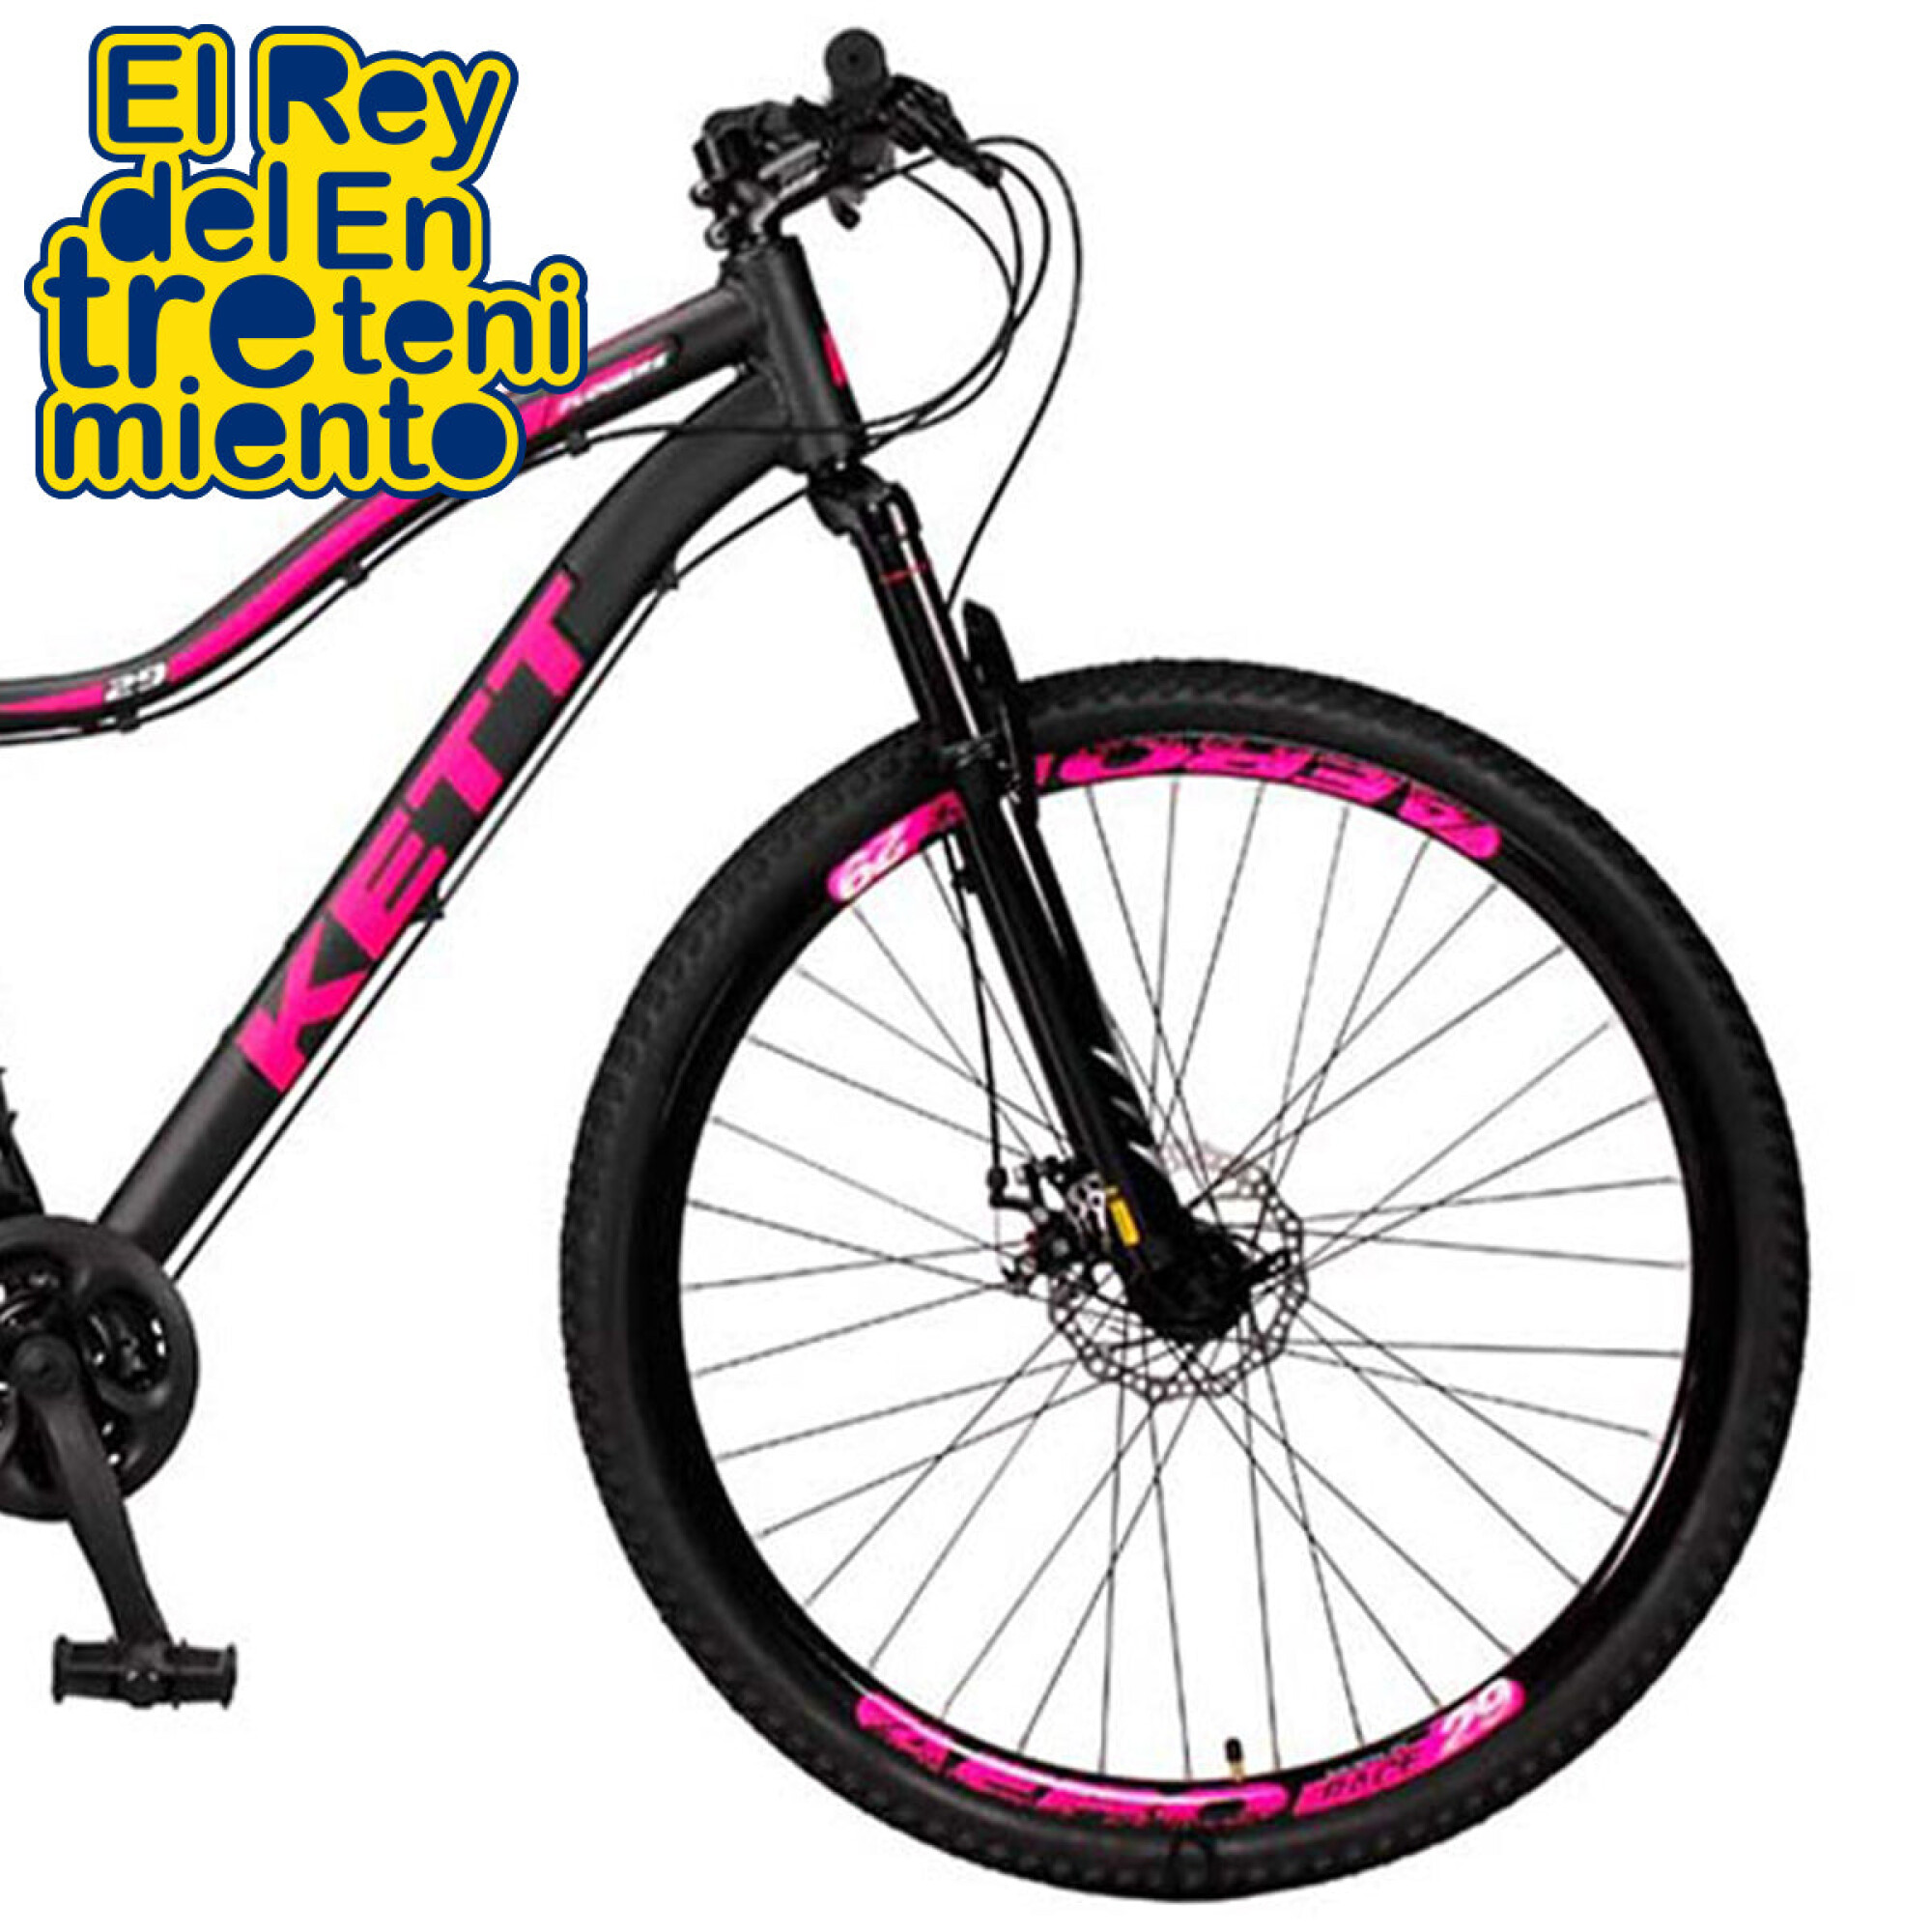 Cera Teflonada Cadena Bicicleta Mti X 30 Gms - Racer Bikes